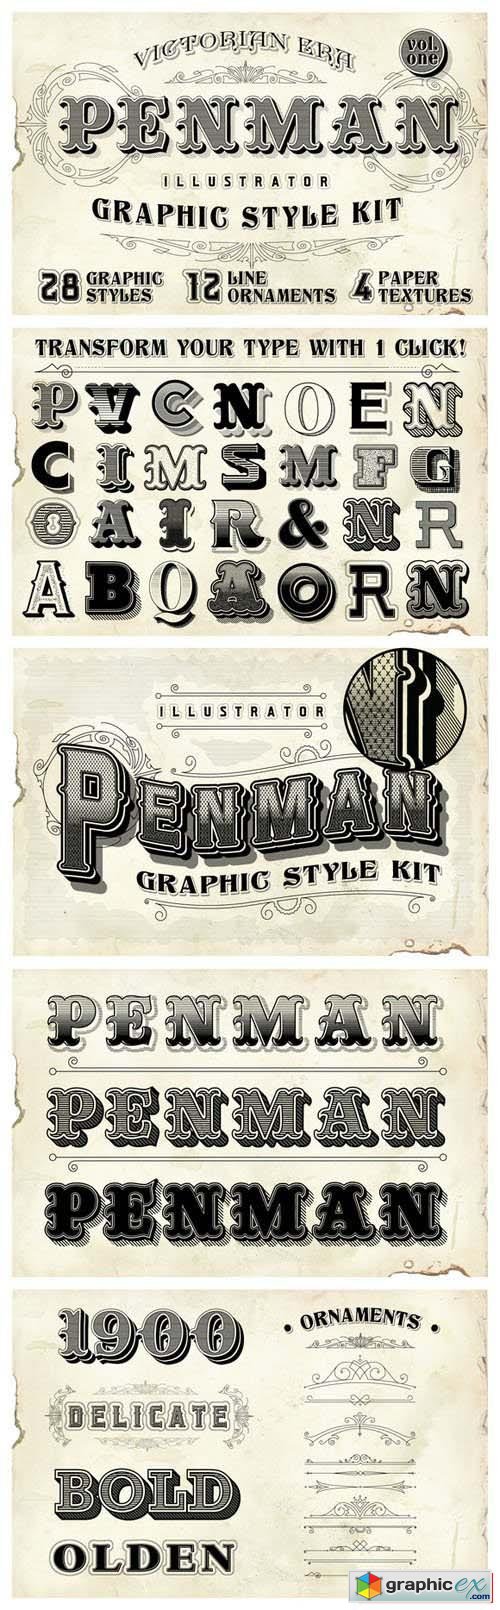 Penman Vintage Graphic Style Kit